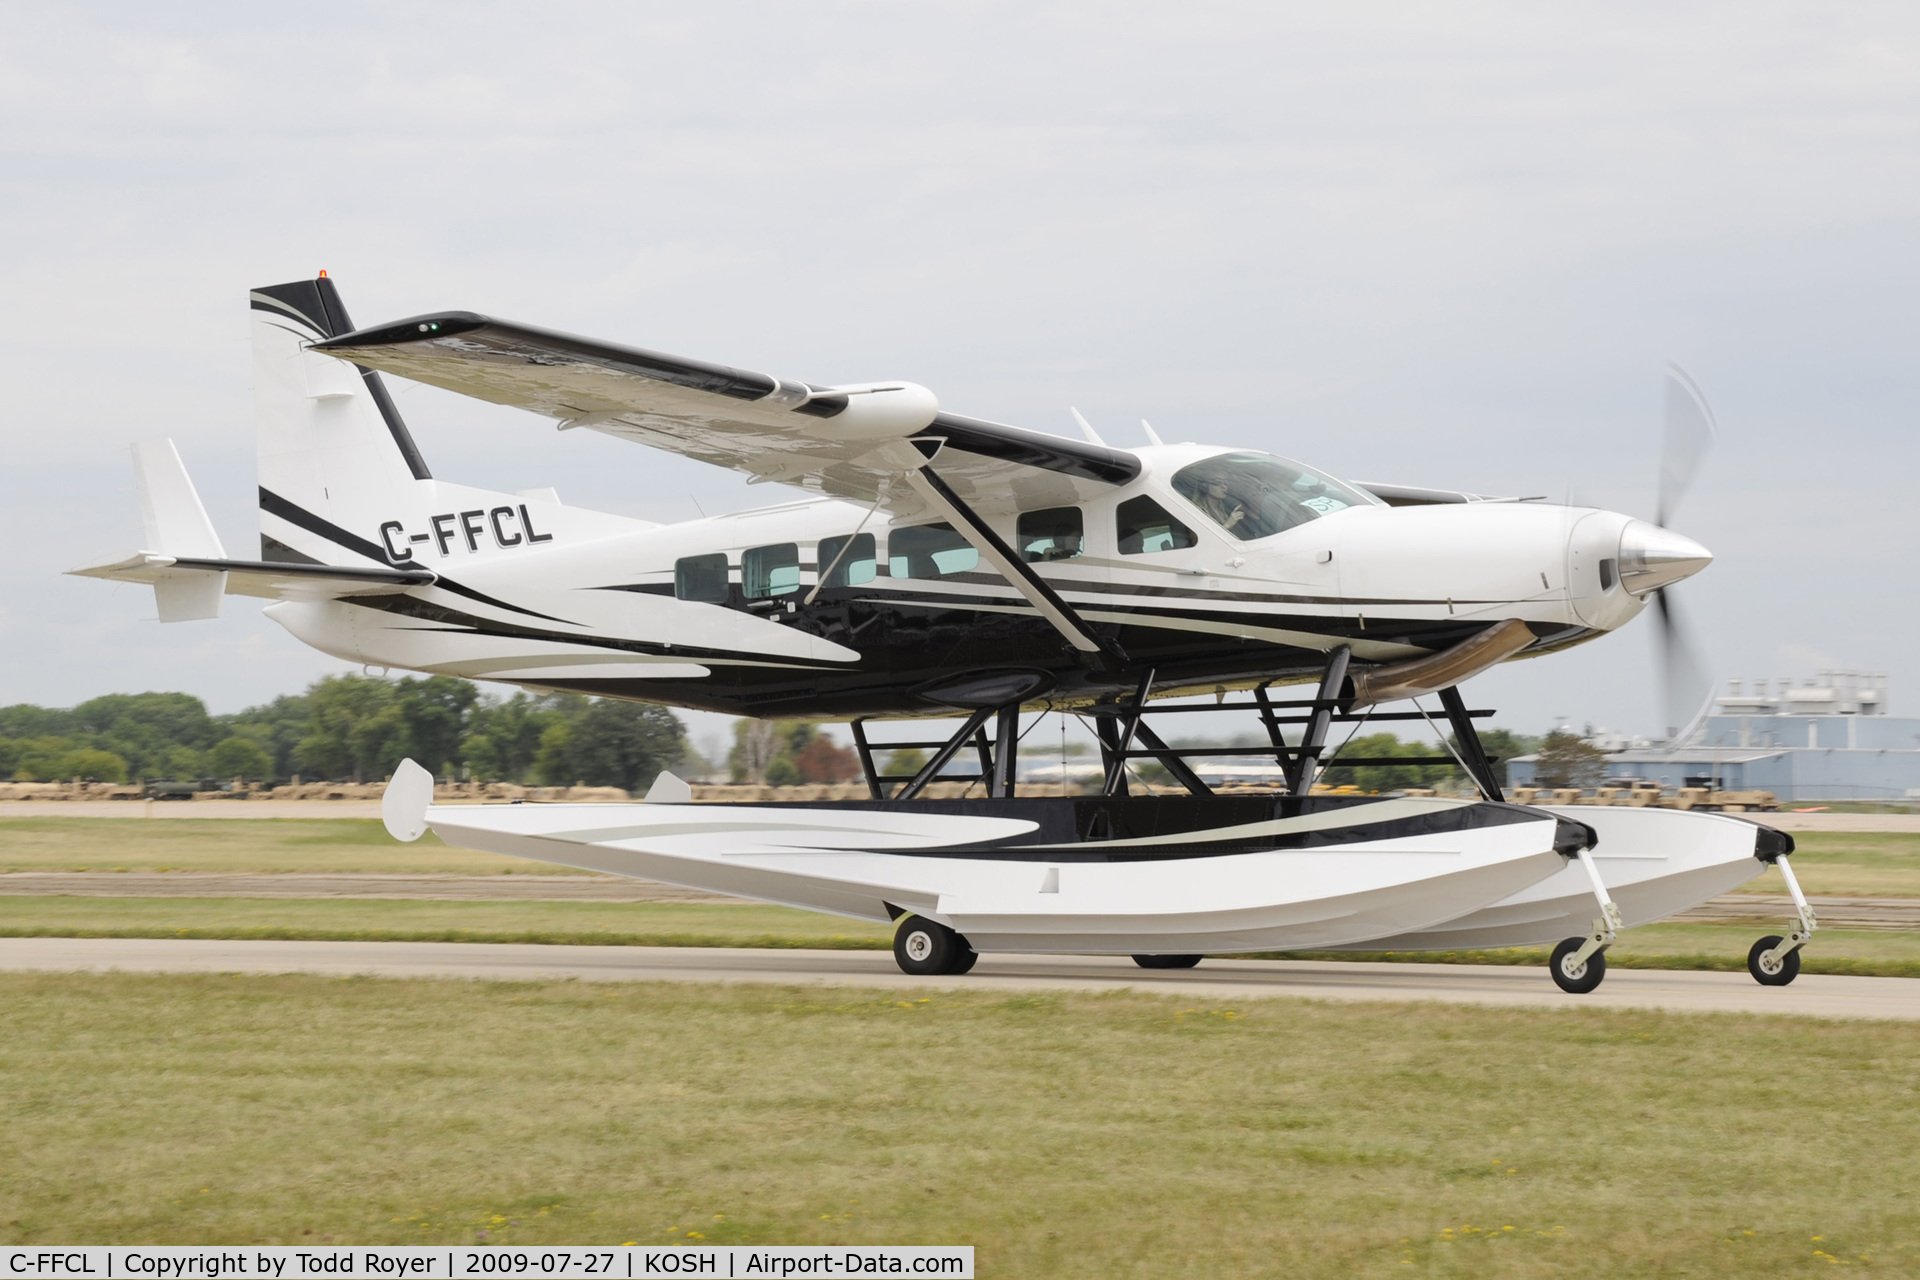 C-FFCL, 2003 Cessna 208 Caravan I C/N 20800301, Taxi for departure